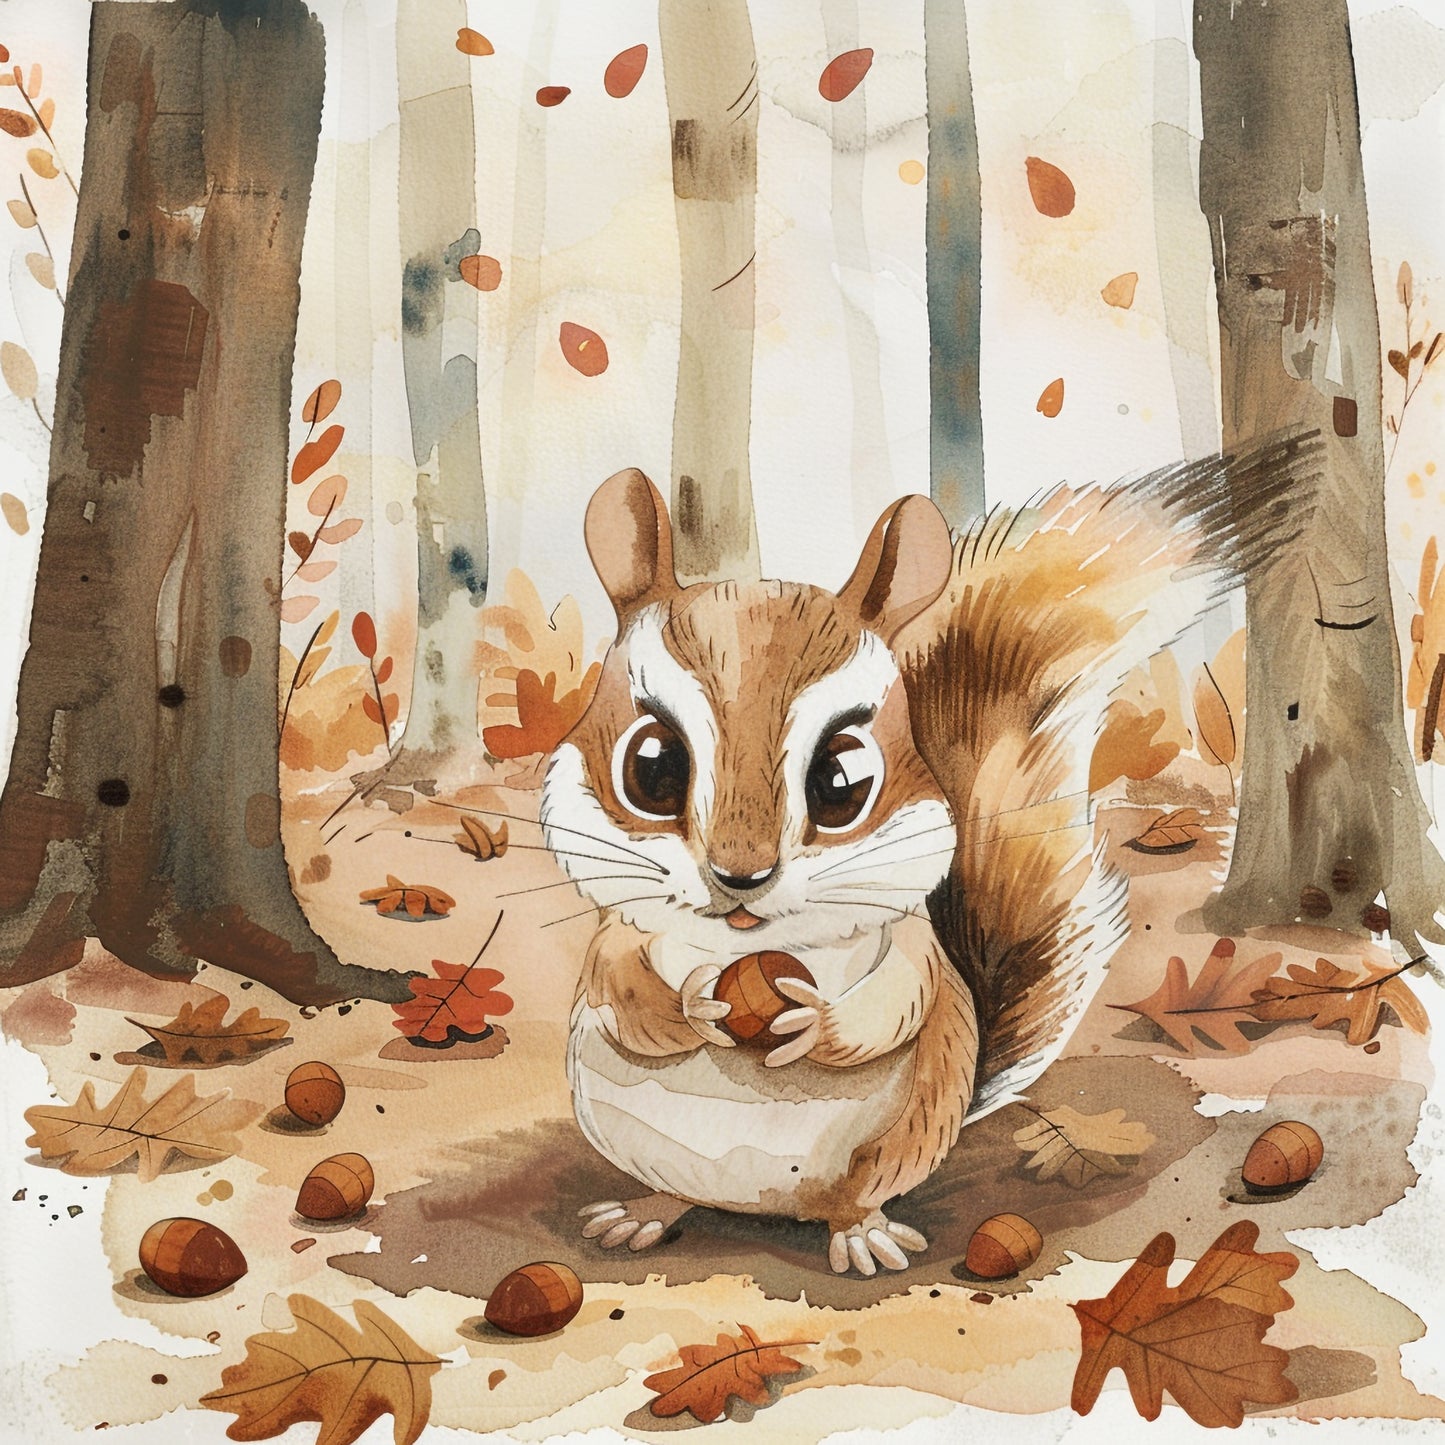 Cute Chipmunk Collecting Acorns in Autumnal Forest Scene